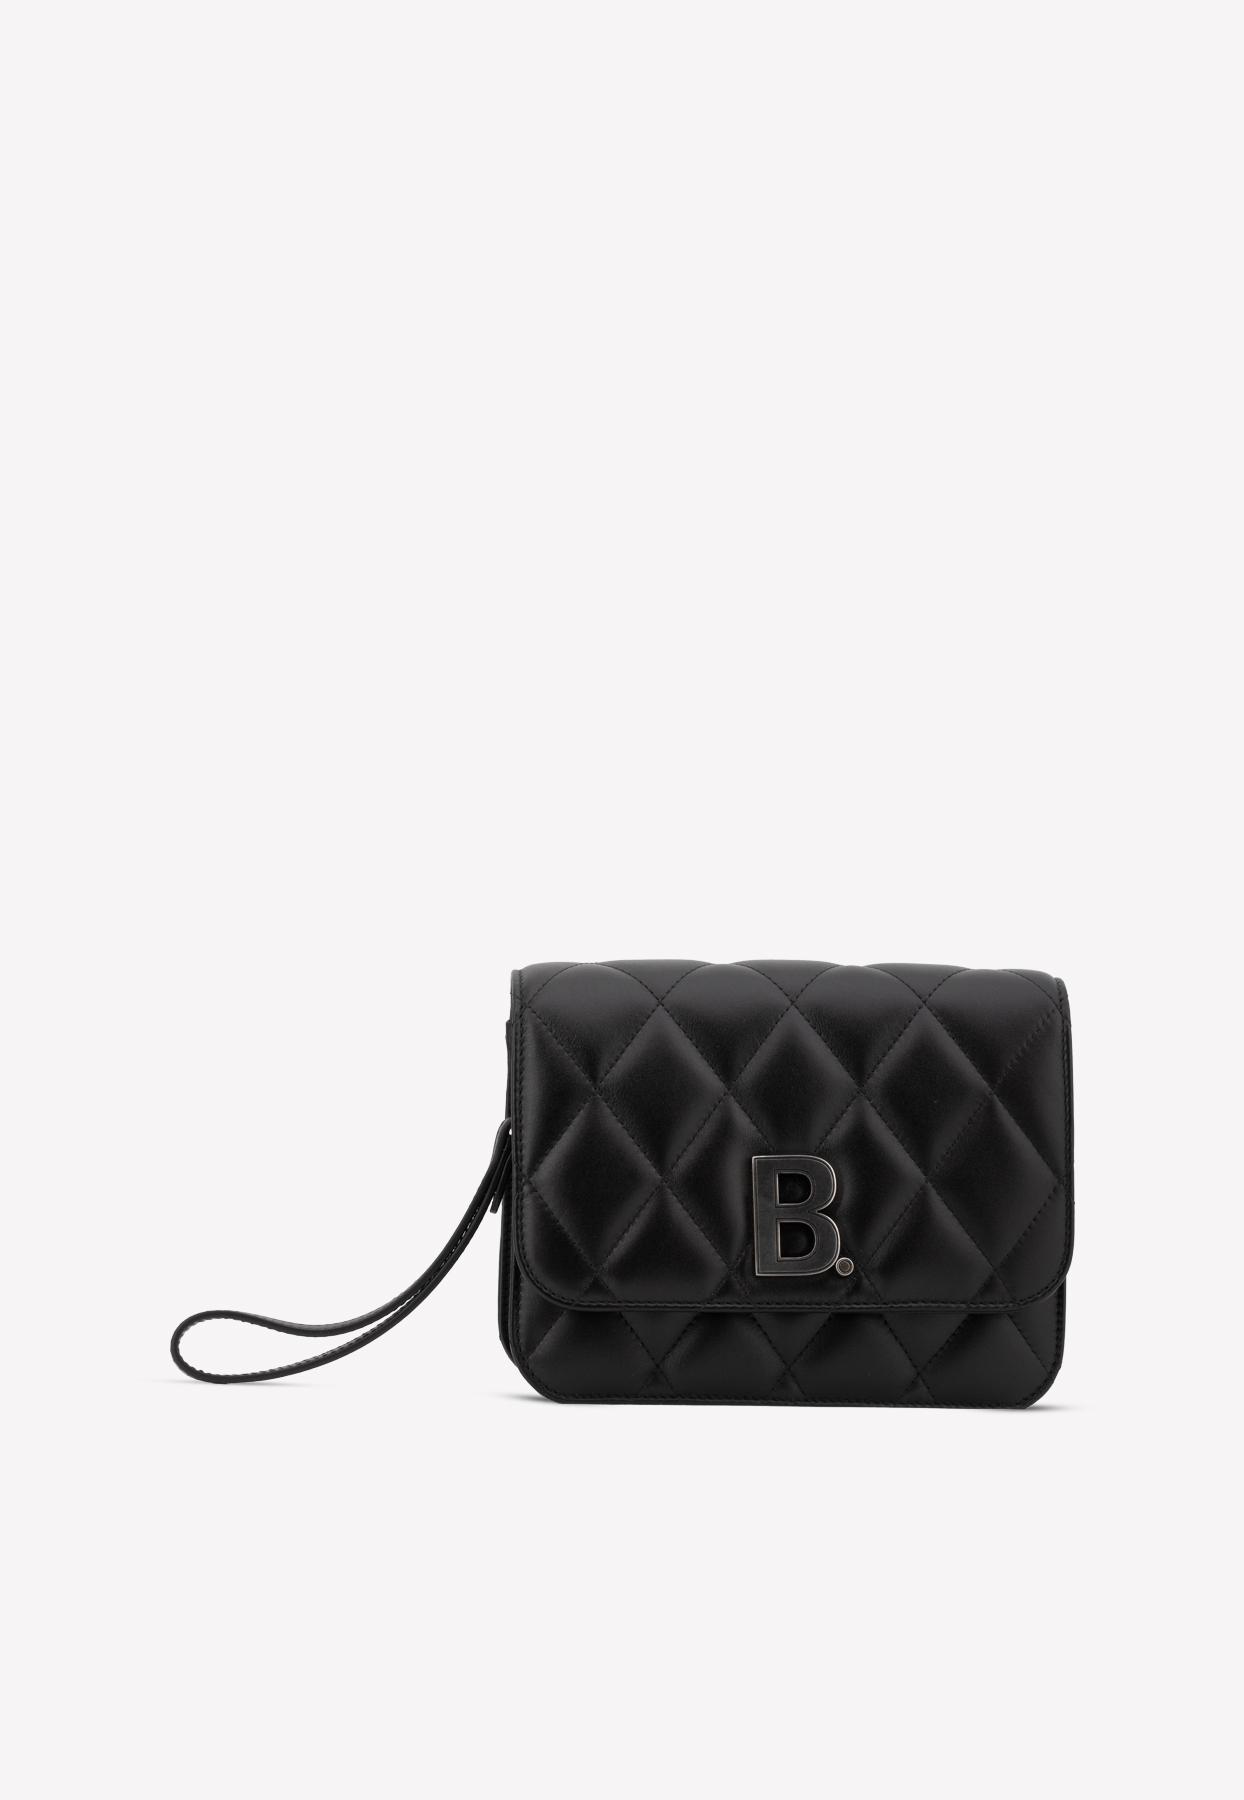 Balenciaga Leather Quilted B Logo Crossbody Bag In Calfskin in Black - Lyst